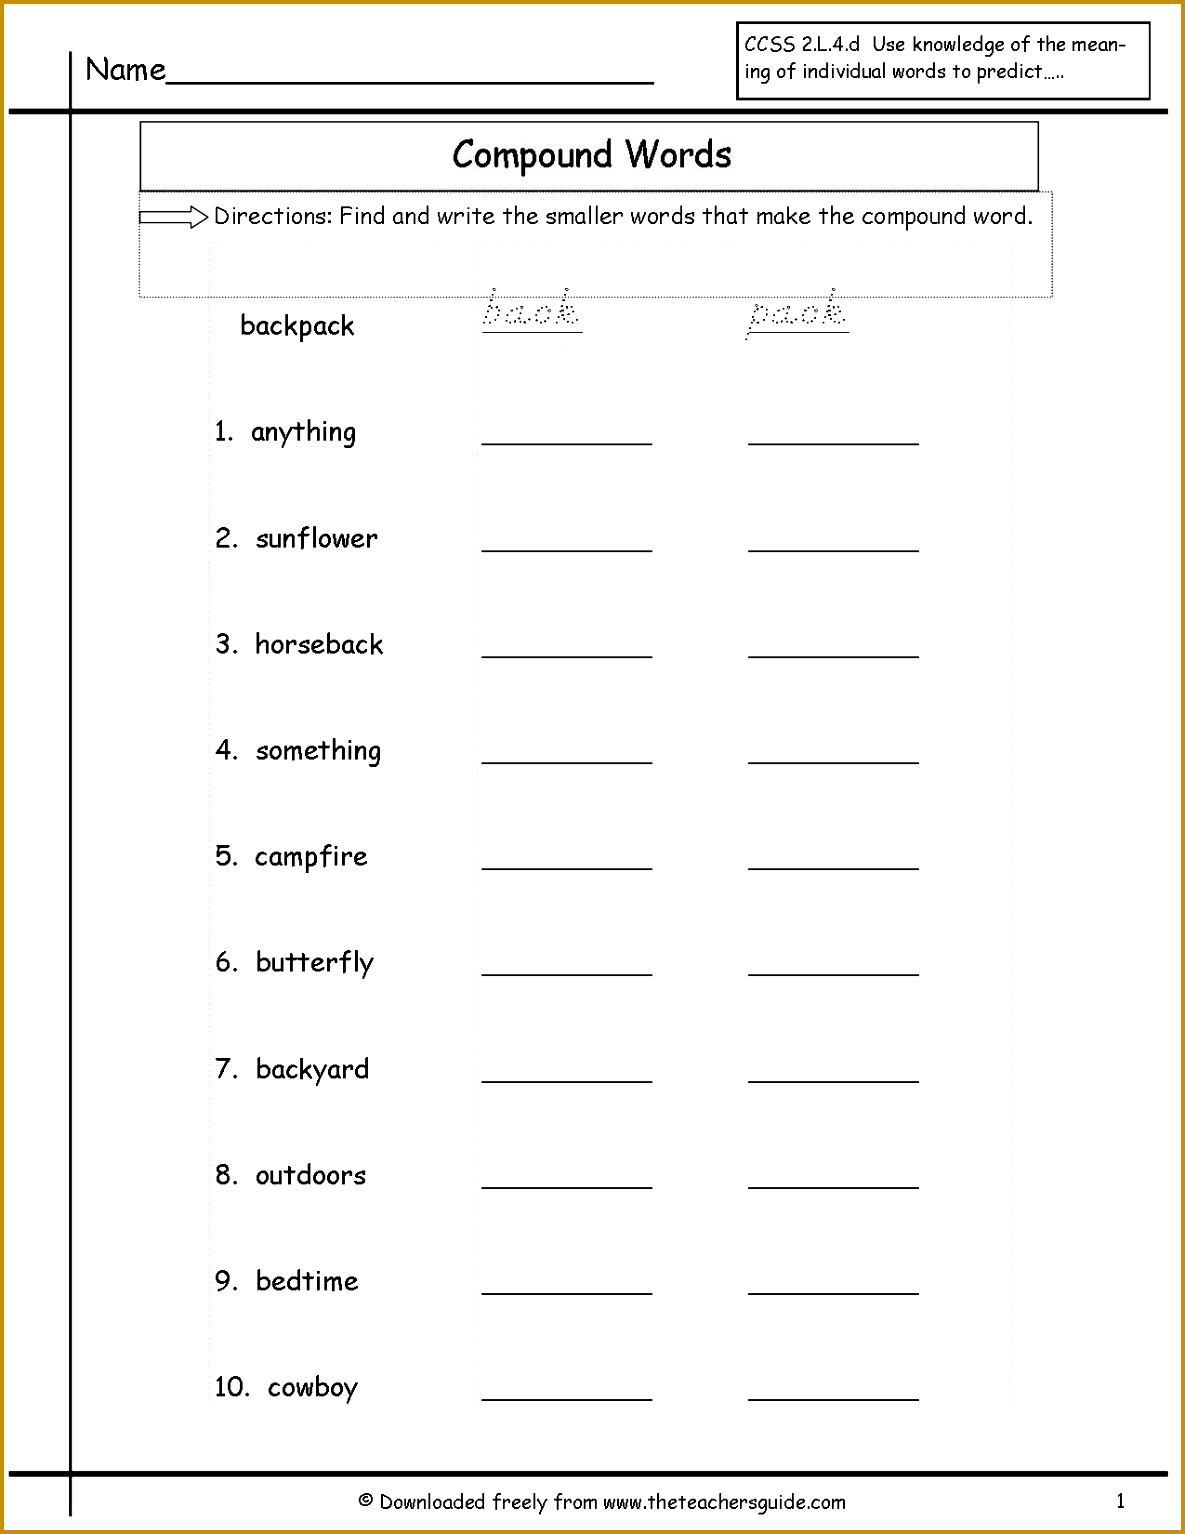 multiple-meaning-words-in-sentences-worksheets-uncategorized-resume-examples